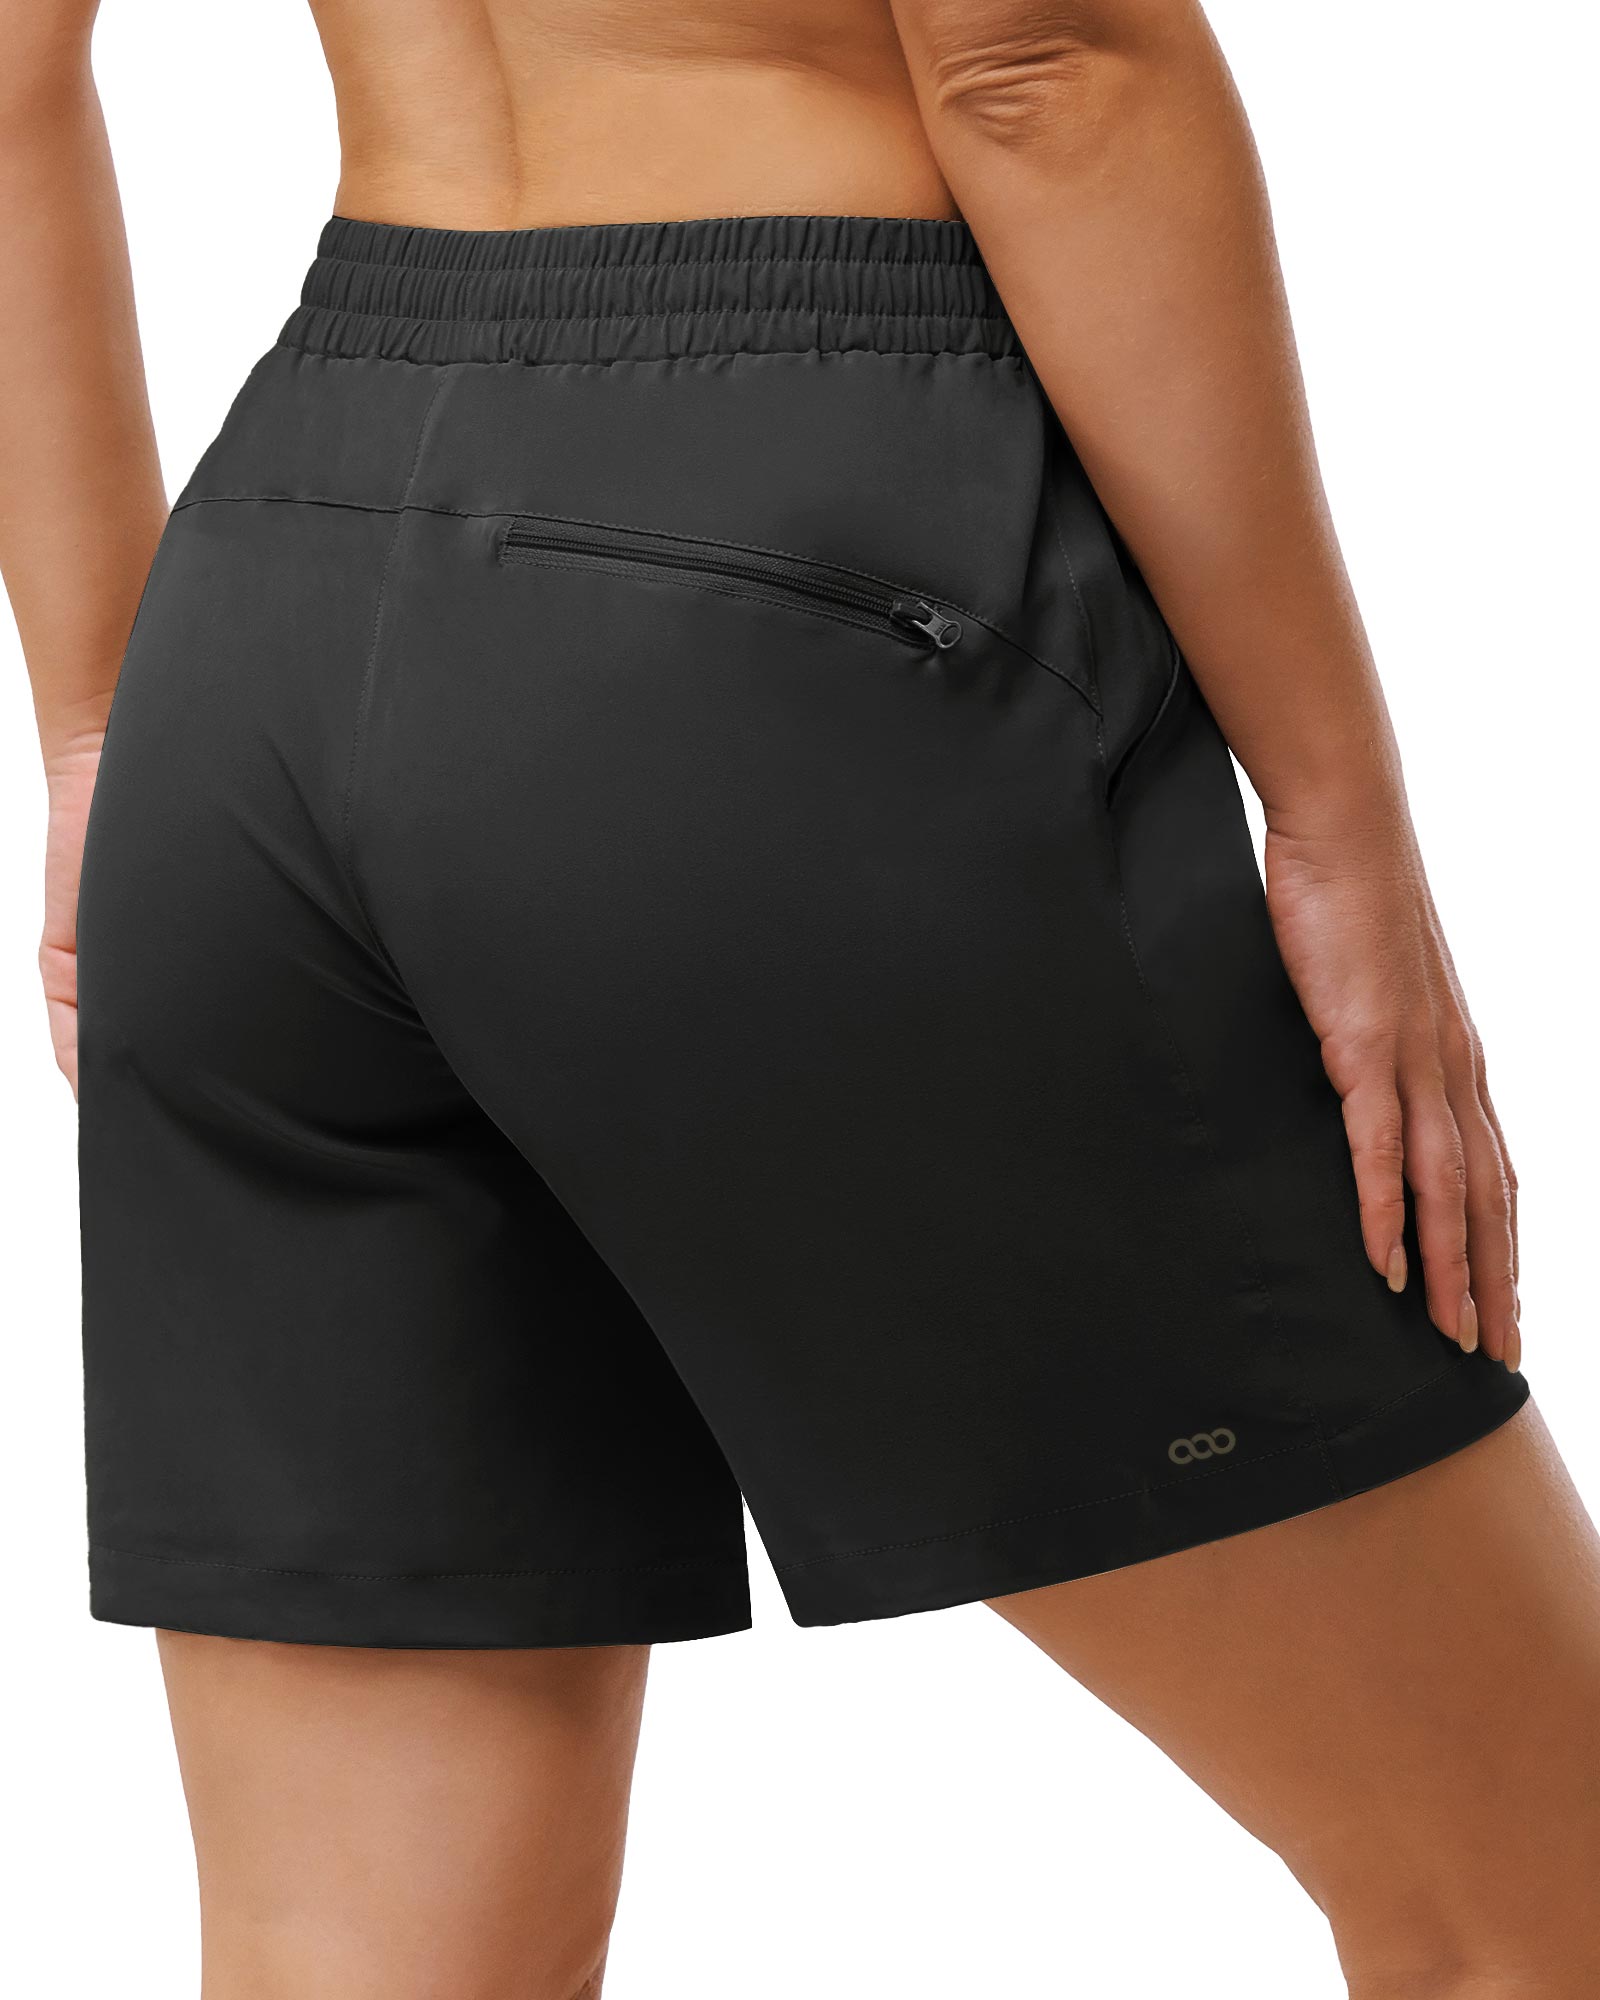 apollo walker Women Hiking Shorts Quick Dry UPF 50+, Lightweight